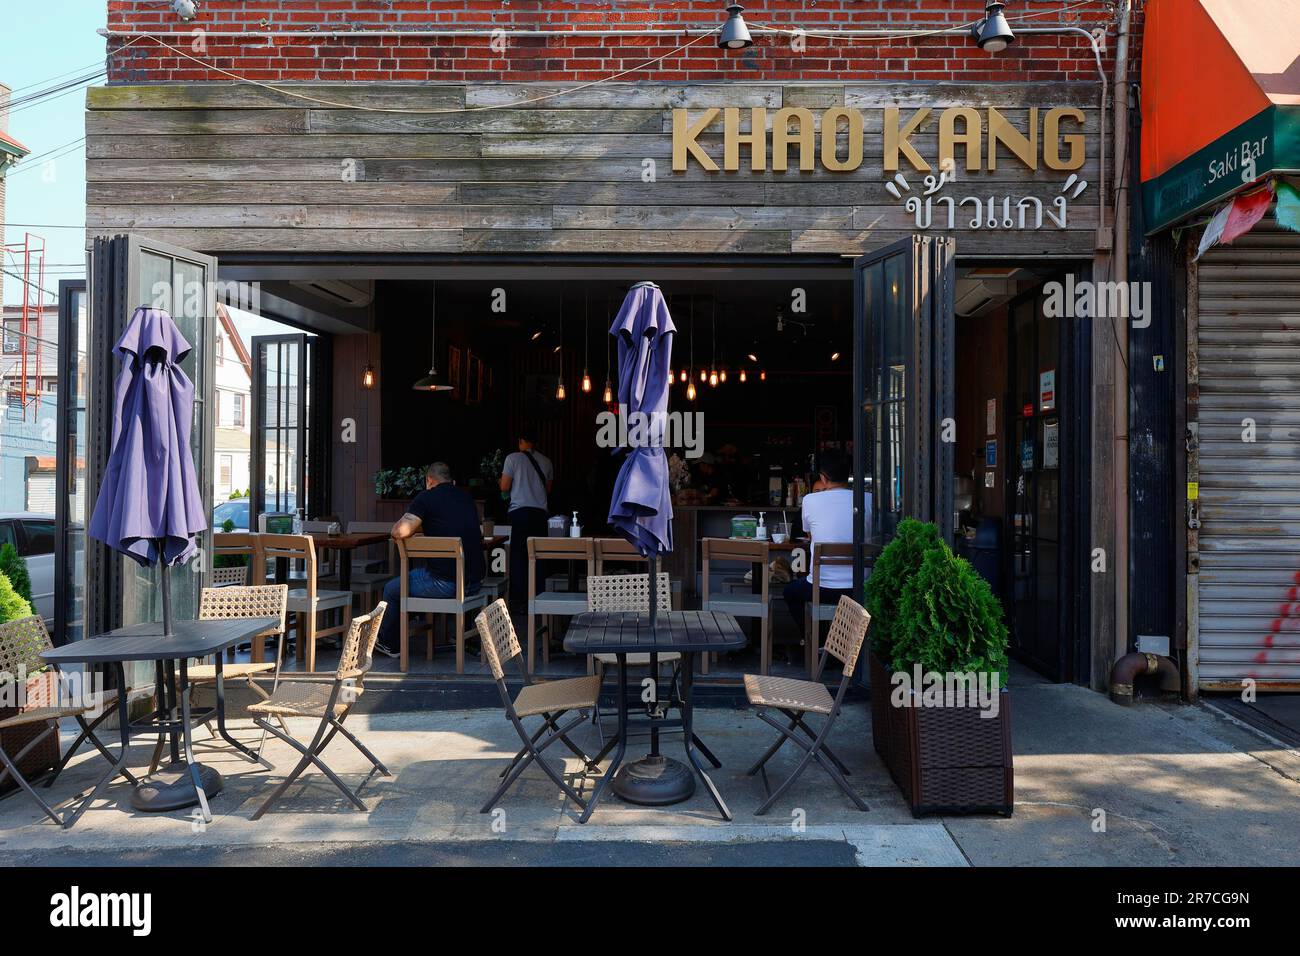 Khao Kang ข้าวแกง, 76-20 Woodside Ave, Queens, New York, NYC foto di un ristorante tailandese di riso e curry a Elmhurst. Foto Stock